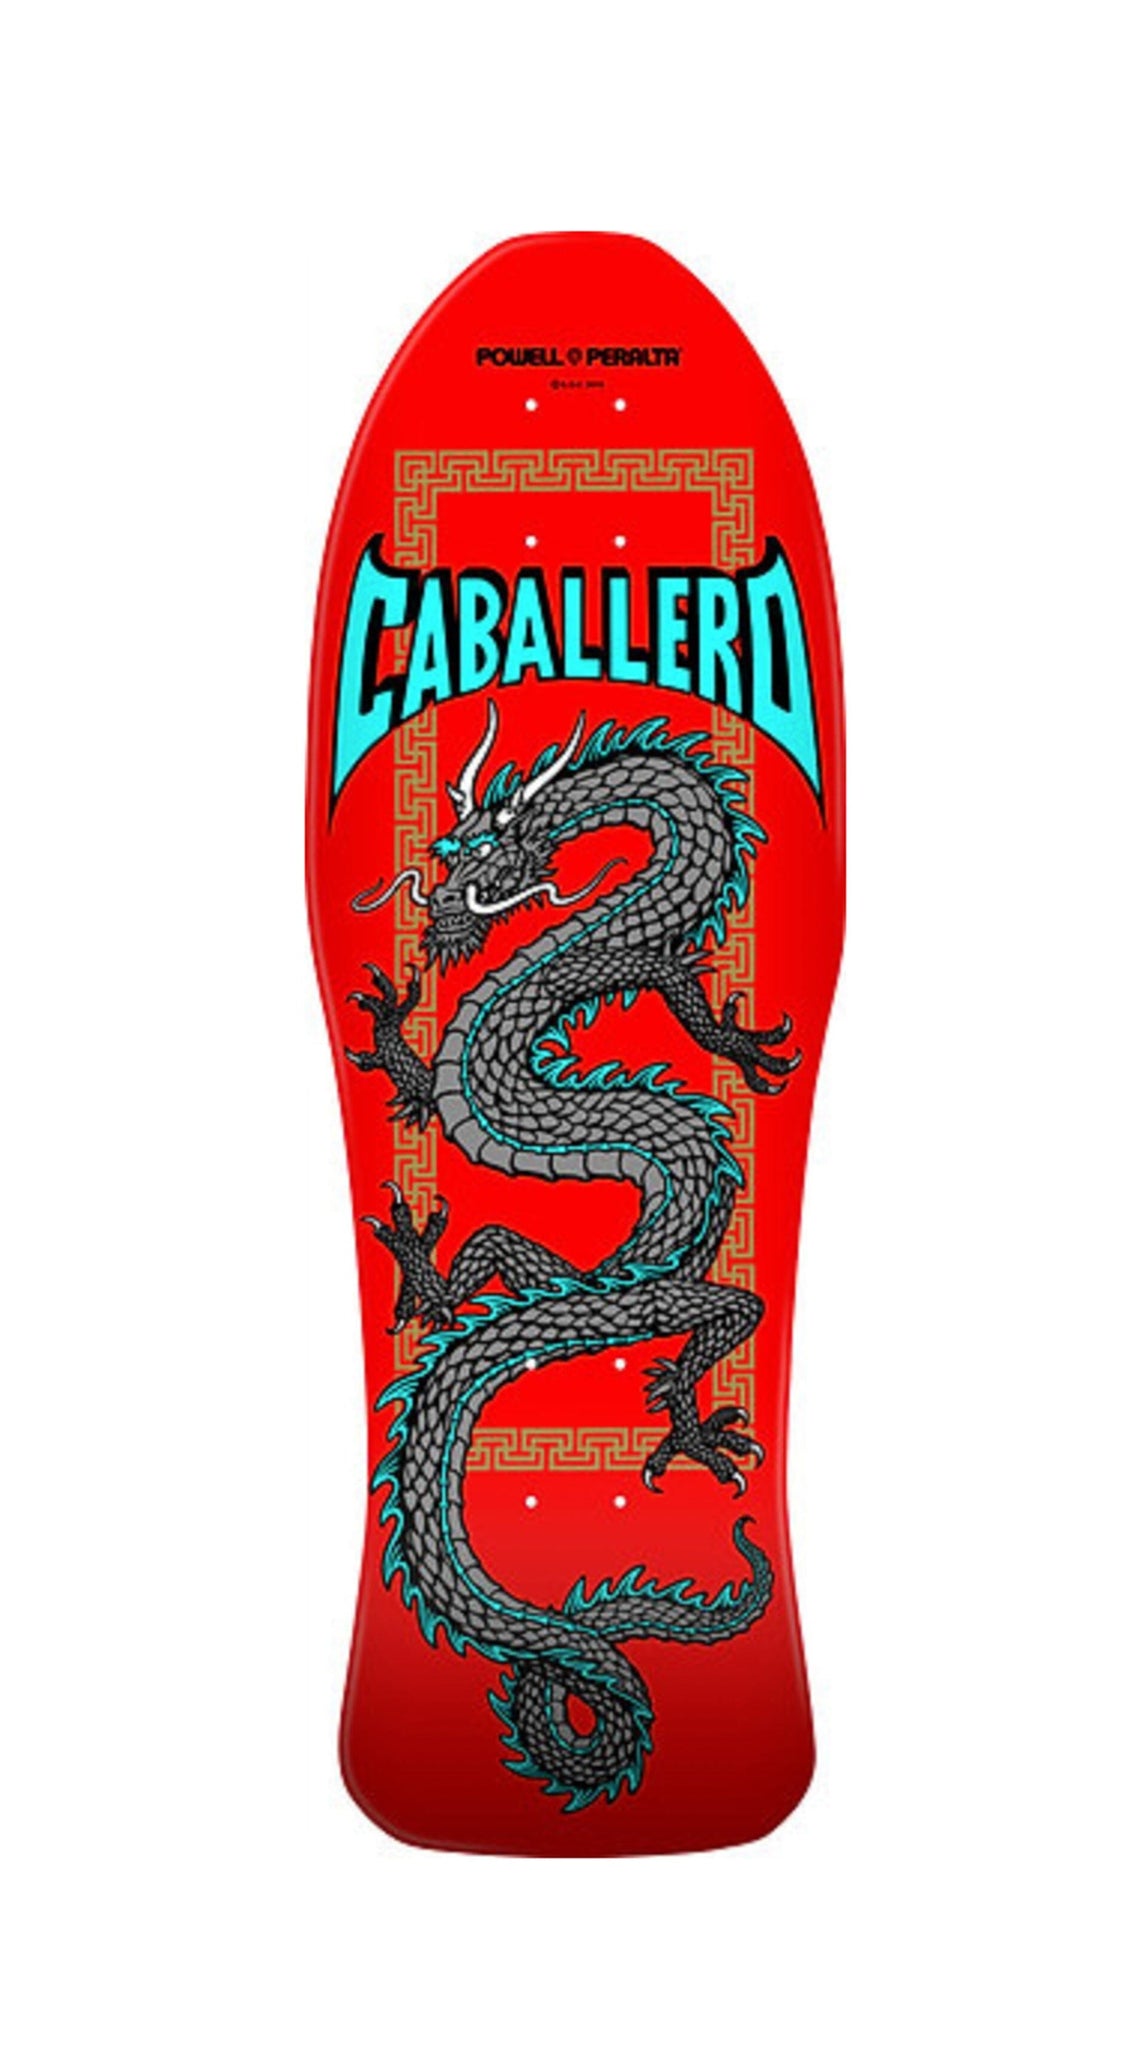 Powell Peralta Caballero Chinesse Dragon Red Gold Reissue Skateboard Deck- Tabla Tablas Powell Peralta 